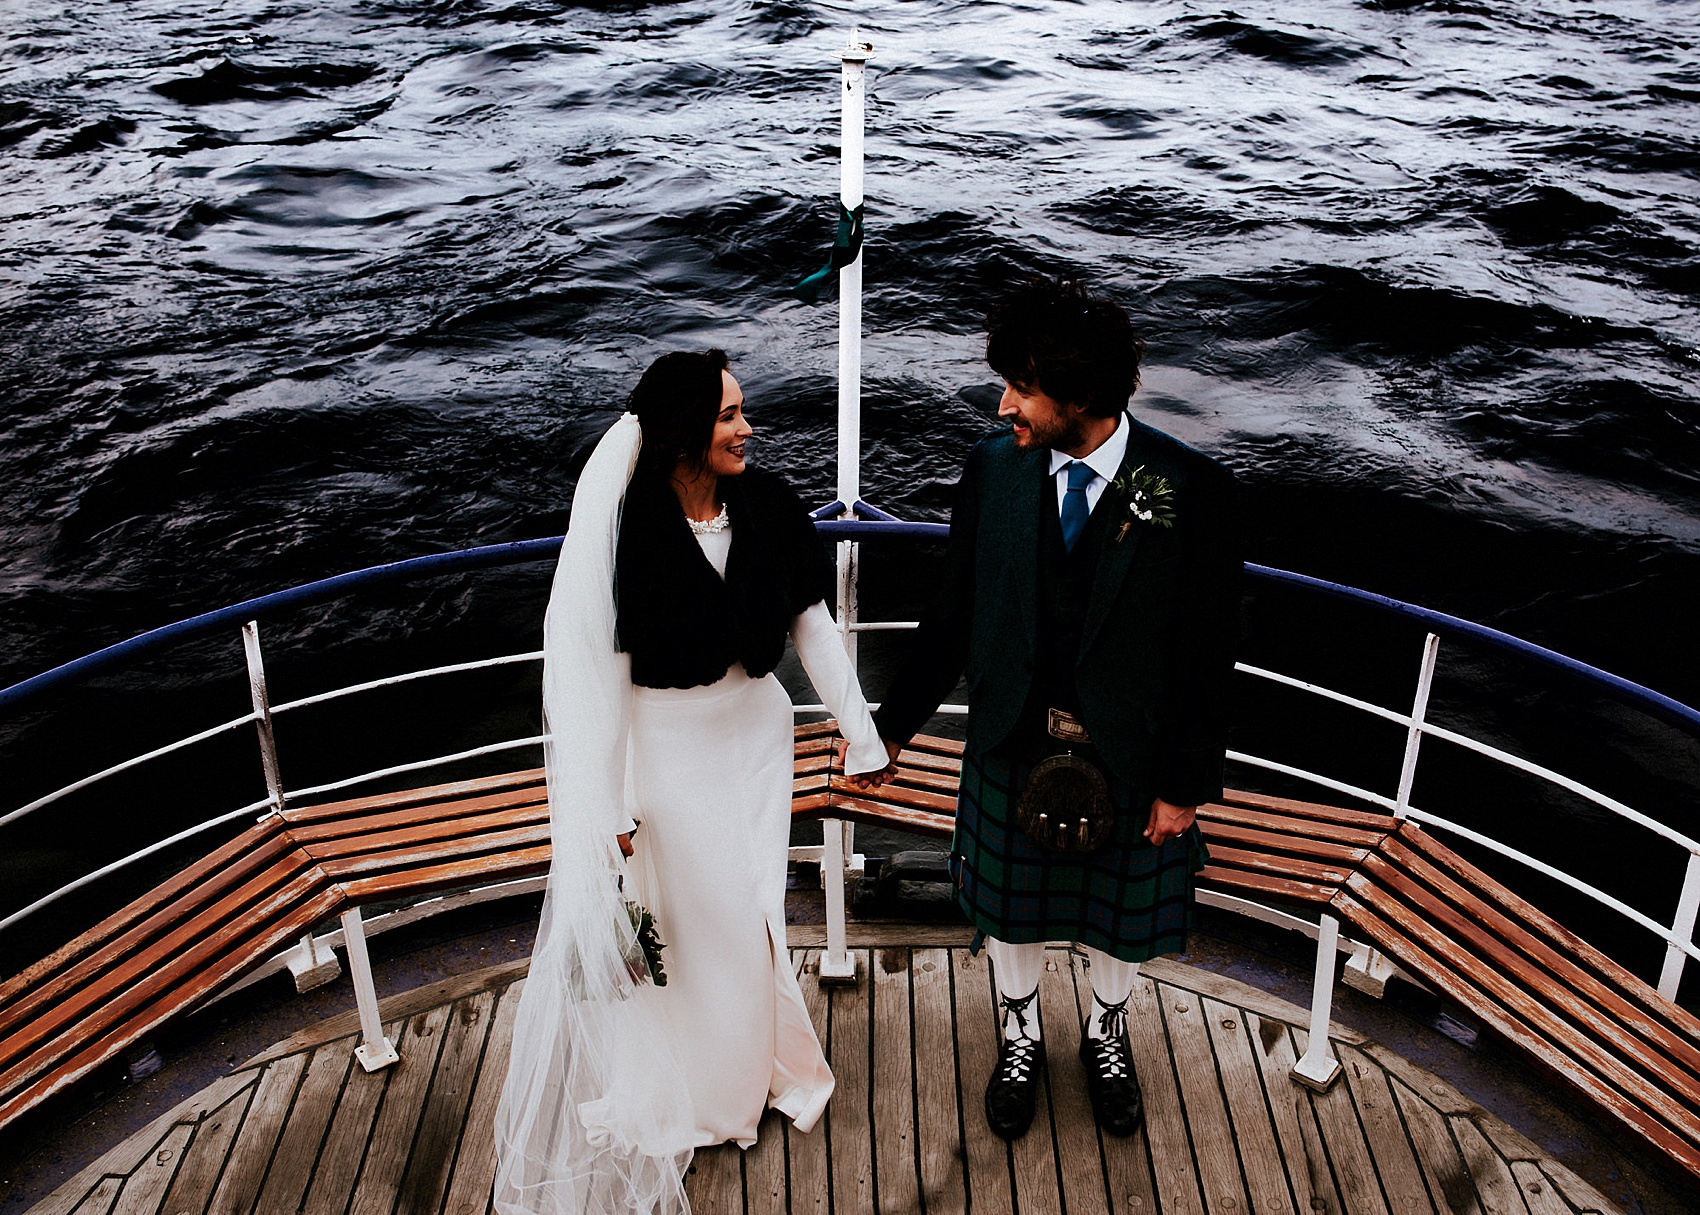 Charlie Brear dress Loch Ness wedding Scotland 29